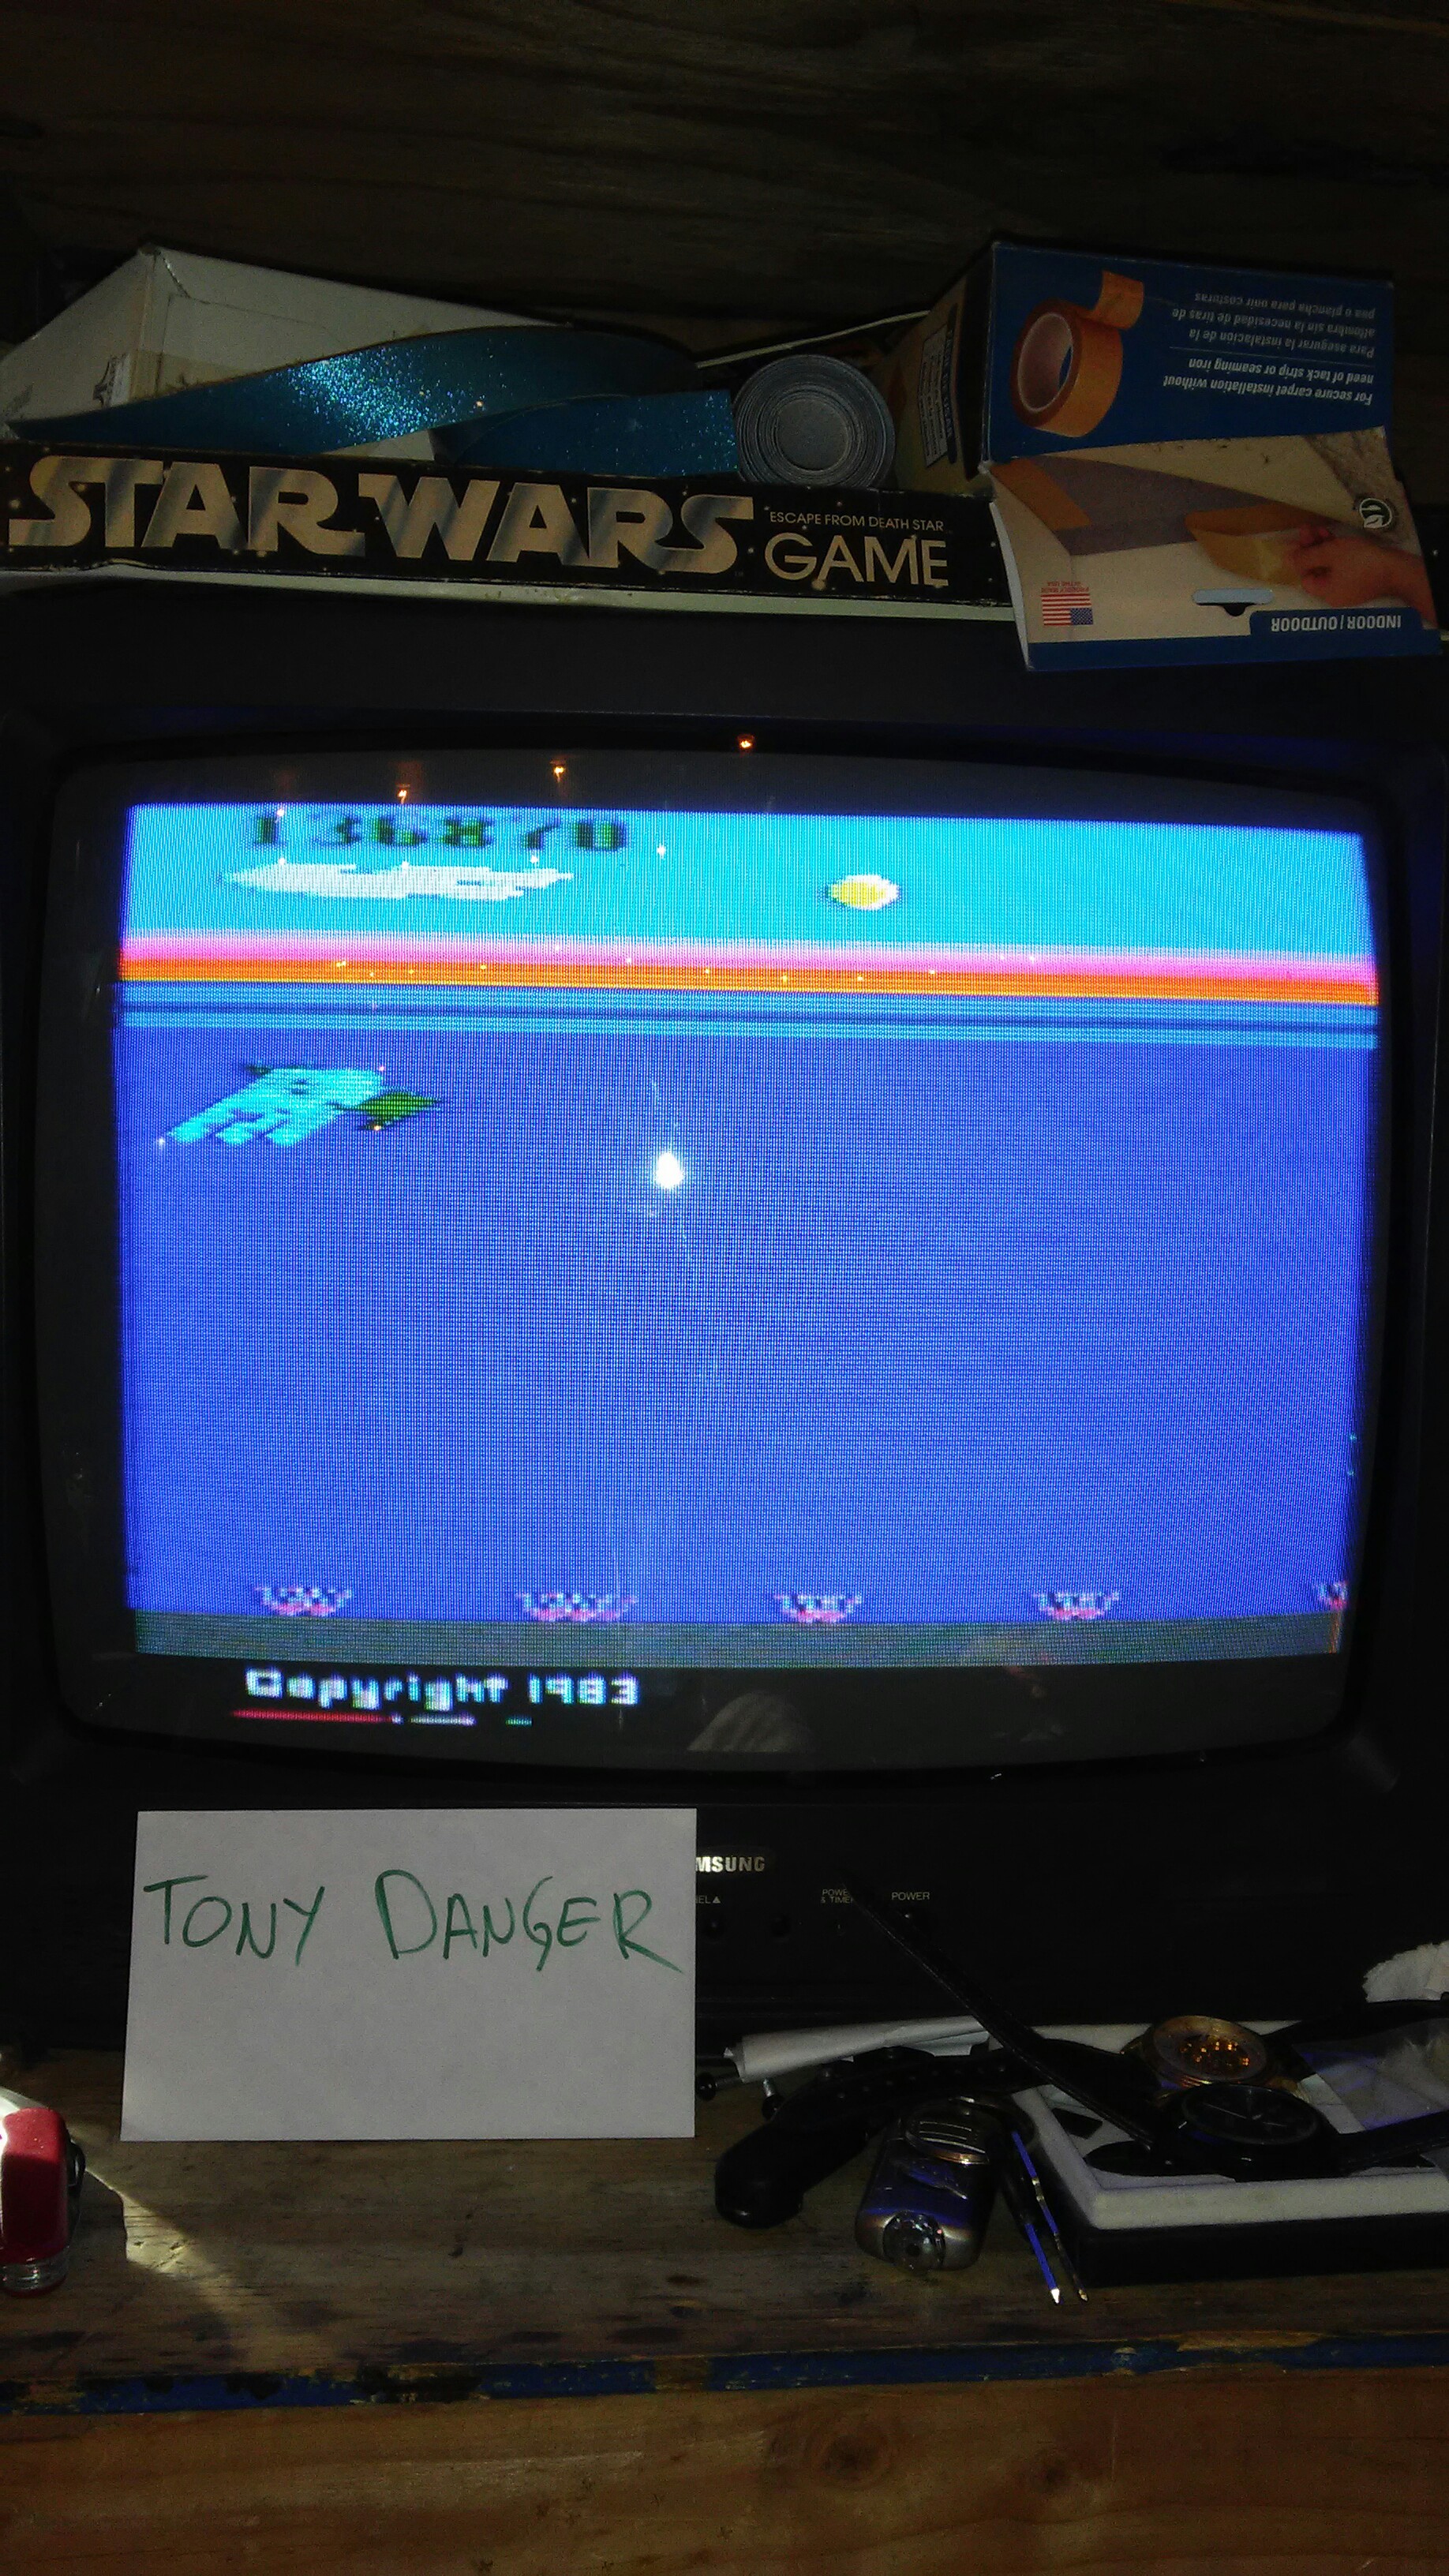 TonyDanger: Dolphin (Atari 2600 Expert/A) 136,870 points on 2016-12-20 13:44:21